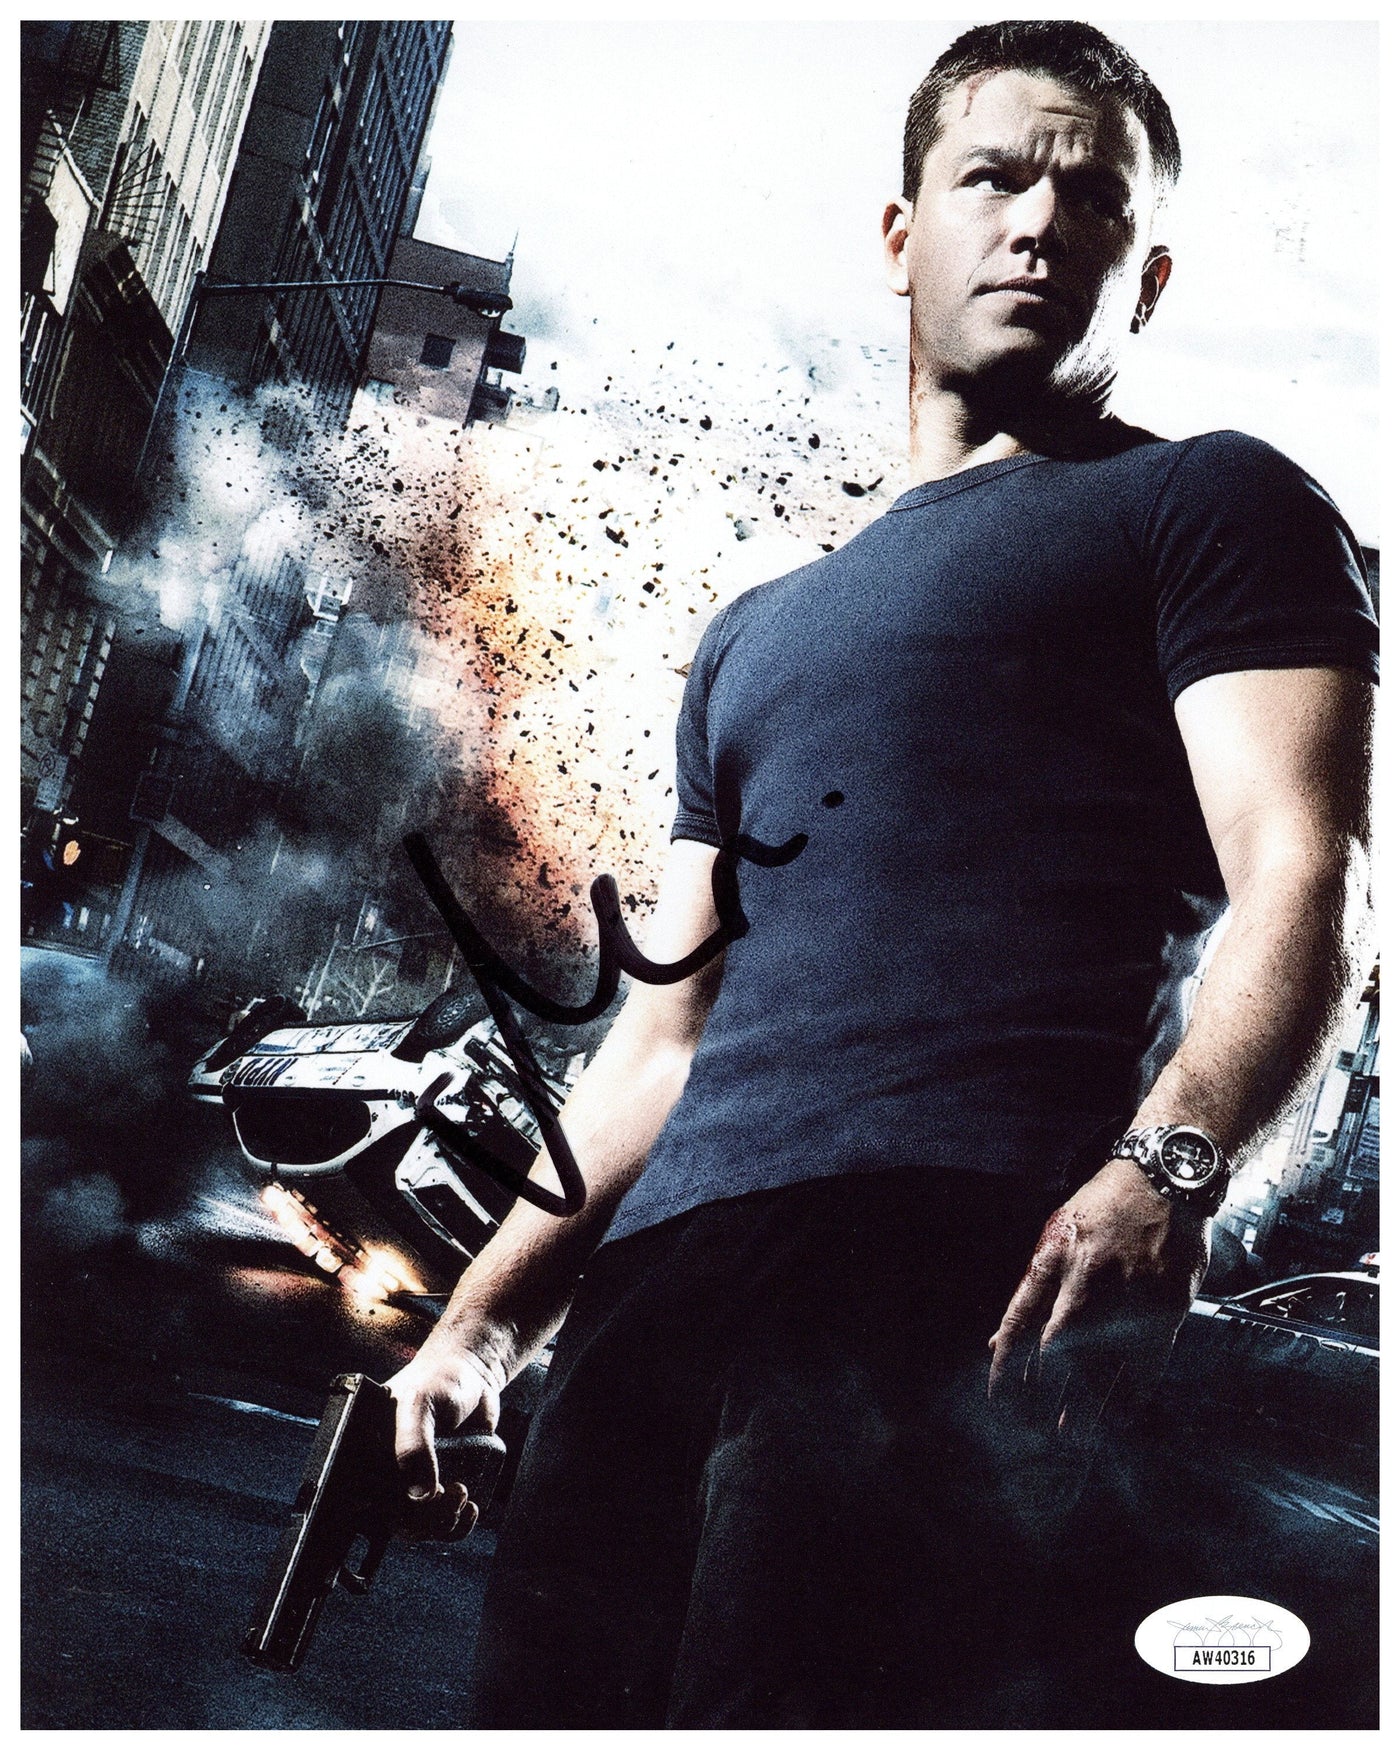 Matt Damon Signed 8x10 Photo The Bourne Identity Autographed Authentic JSA COA